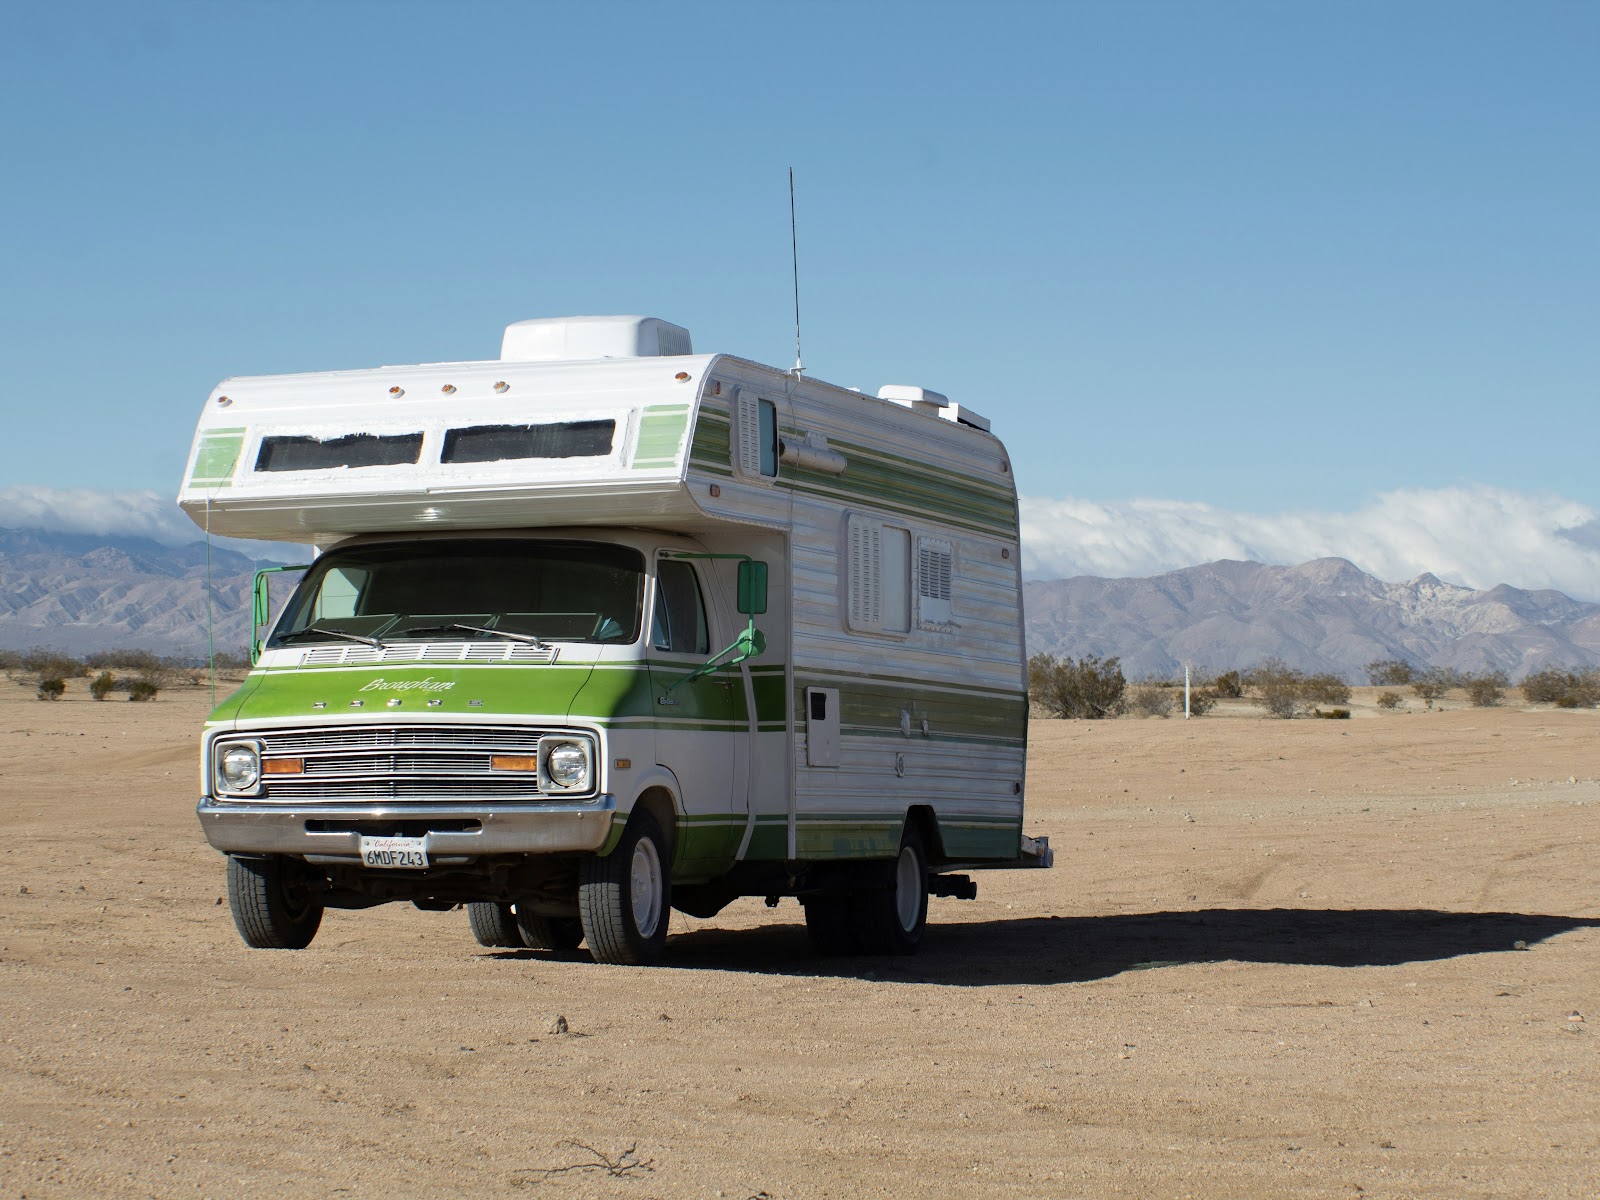 Retro RV dry camping in the desert